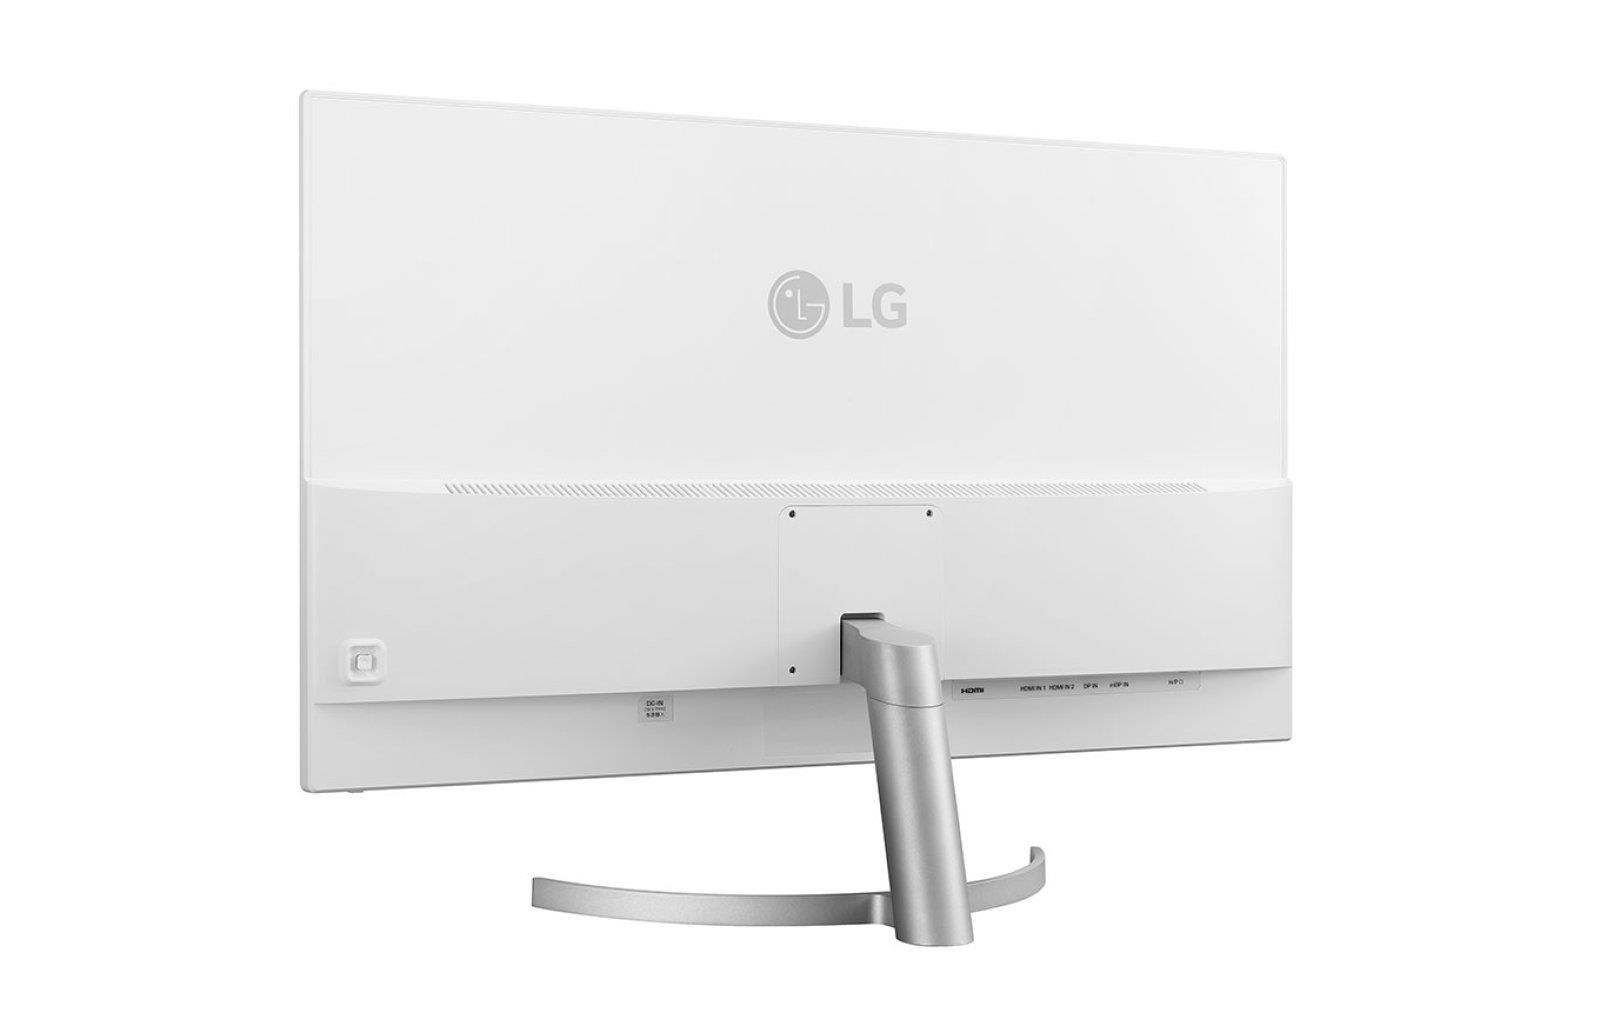 LG's 32-inch QHD monitor packs AMD FreeSync for around $300 | DeviceDaily.com